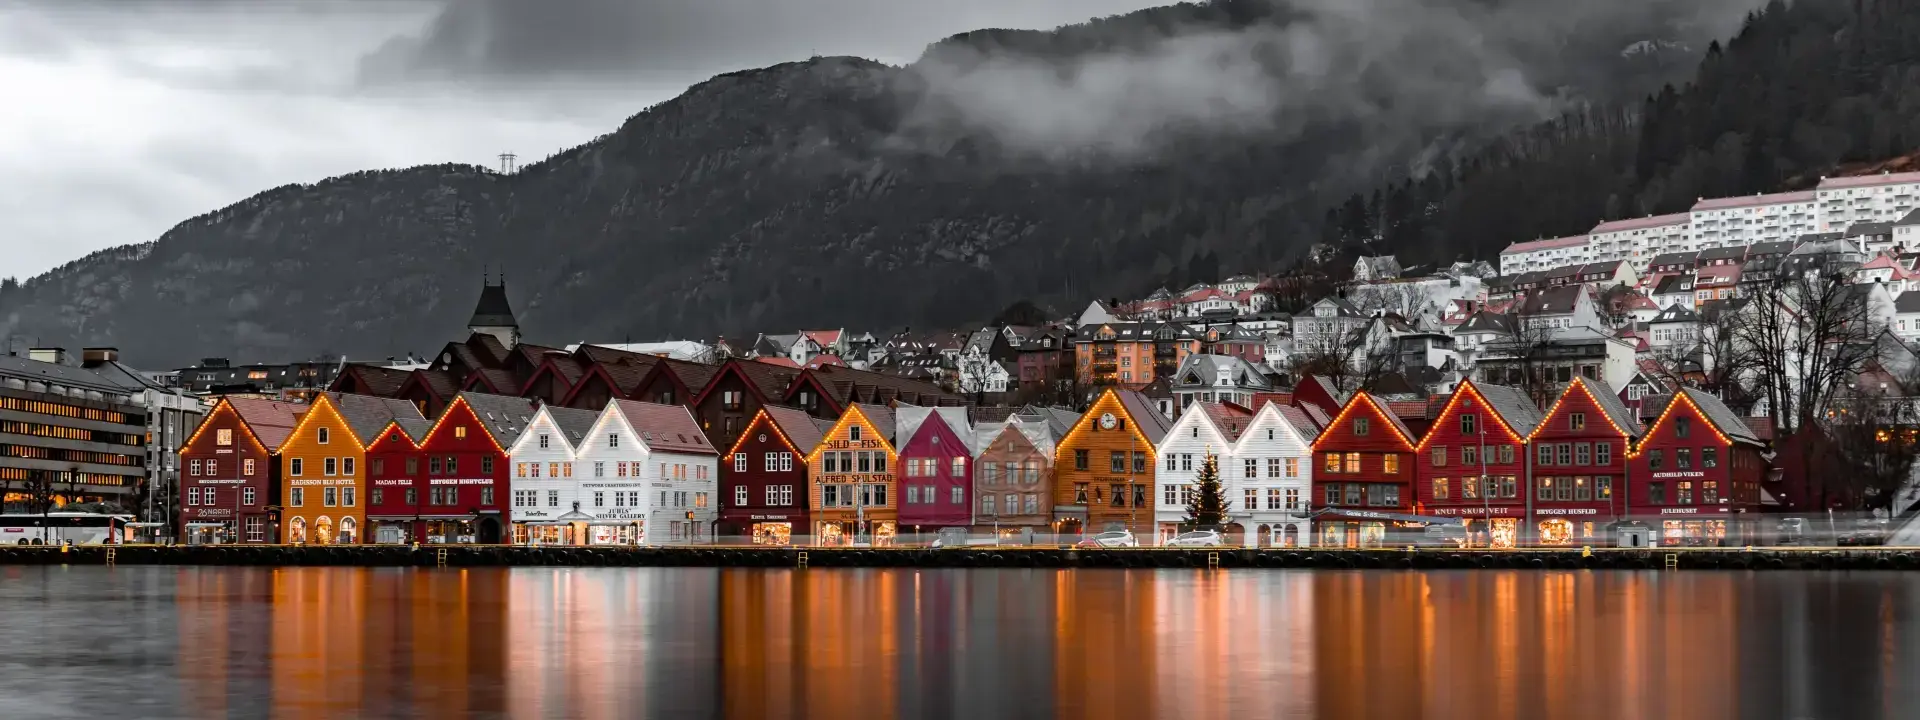 Find the best Job boards in Norway in 2023